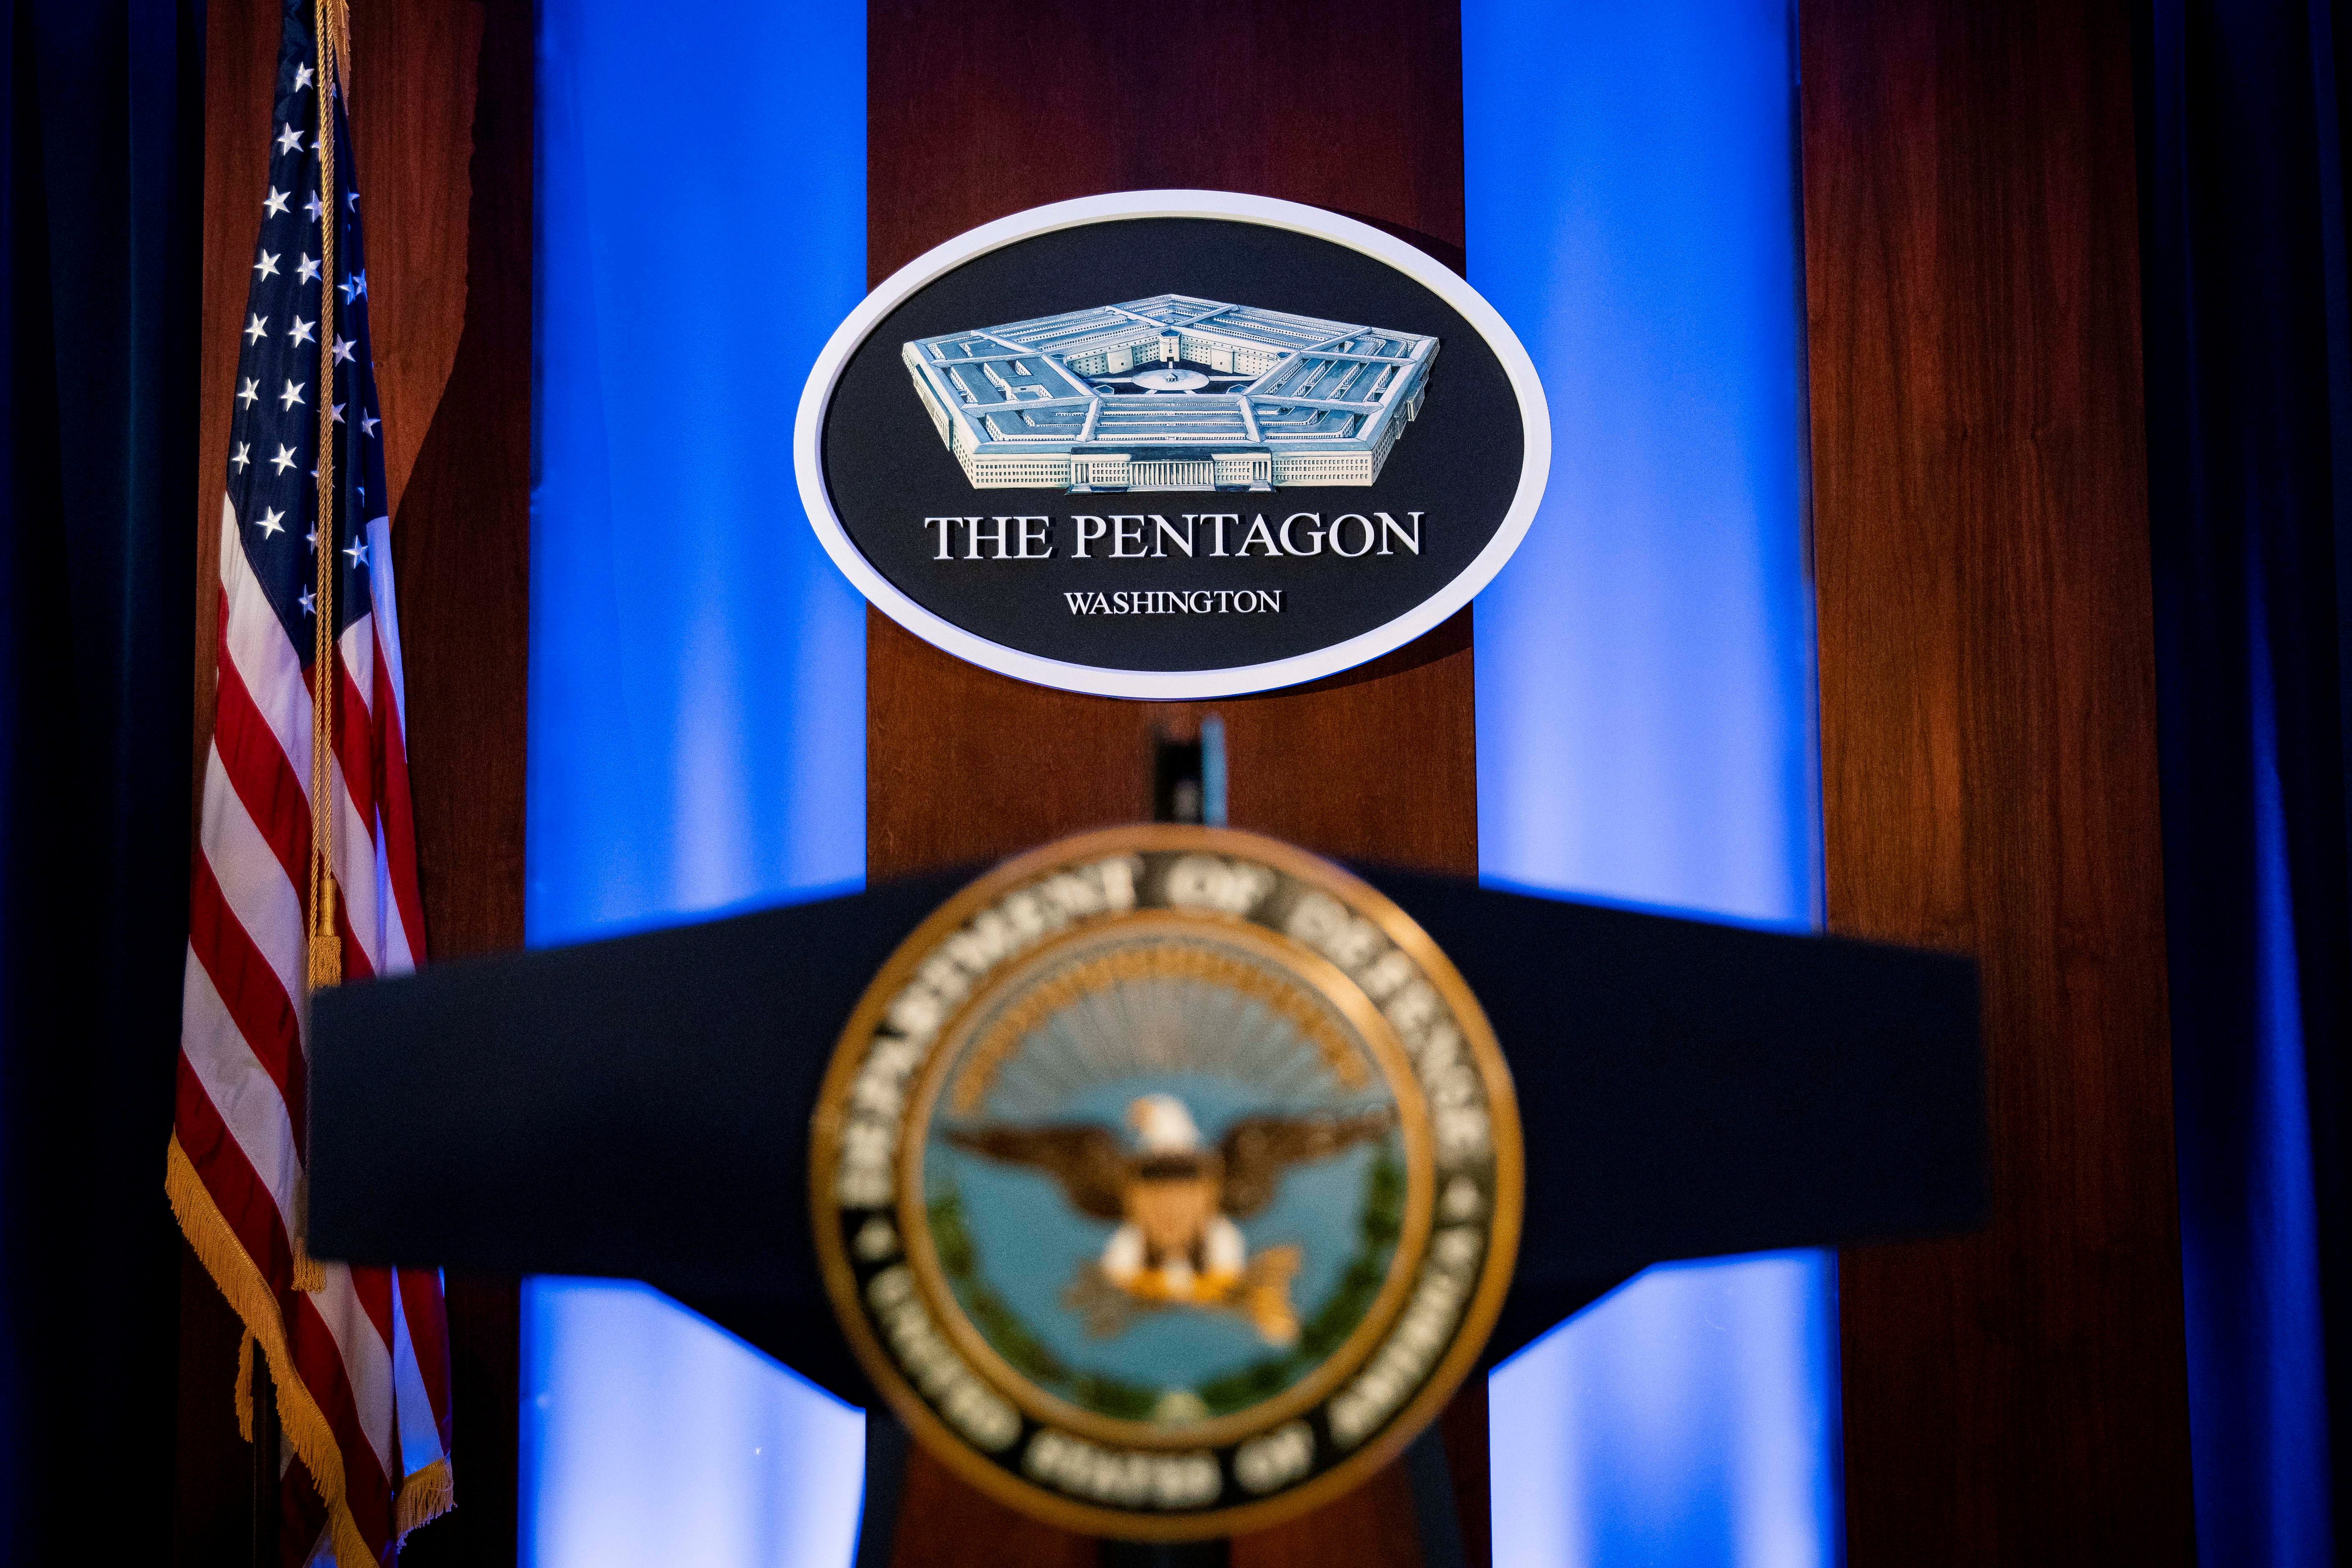 The briefing room at the Pentagon in Arlington, Virginia